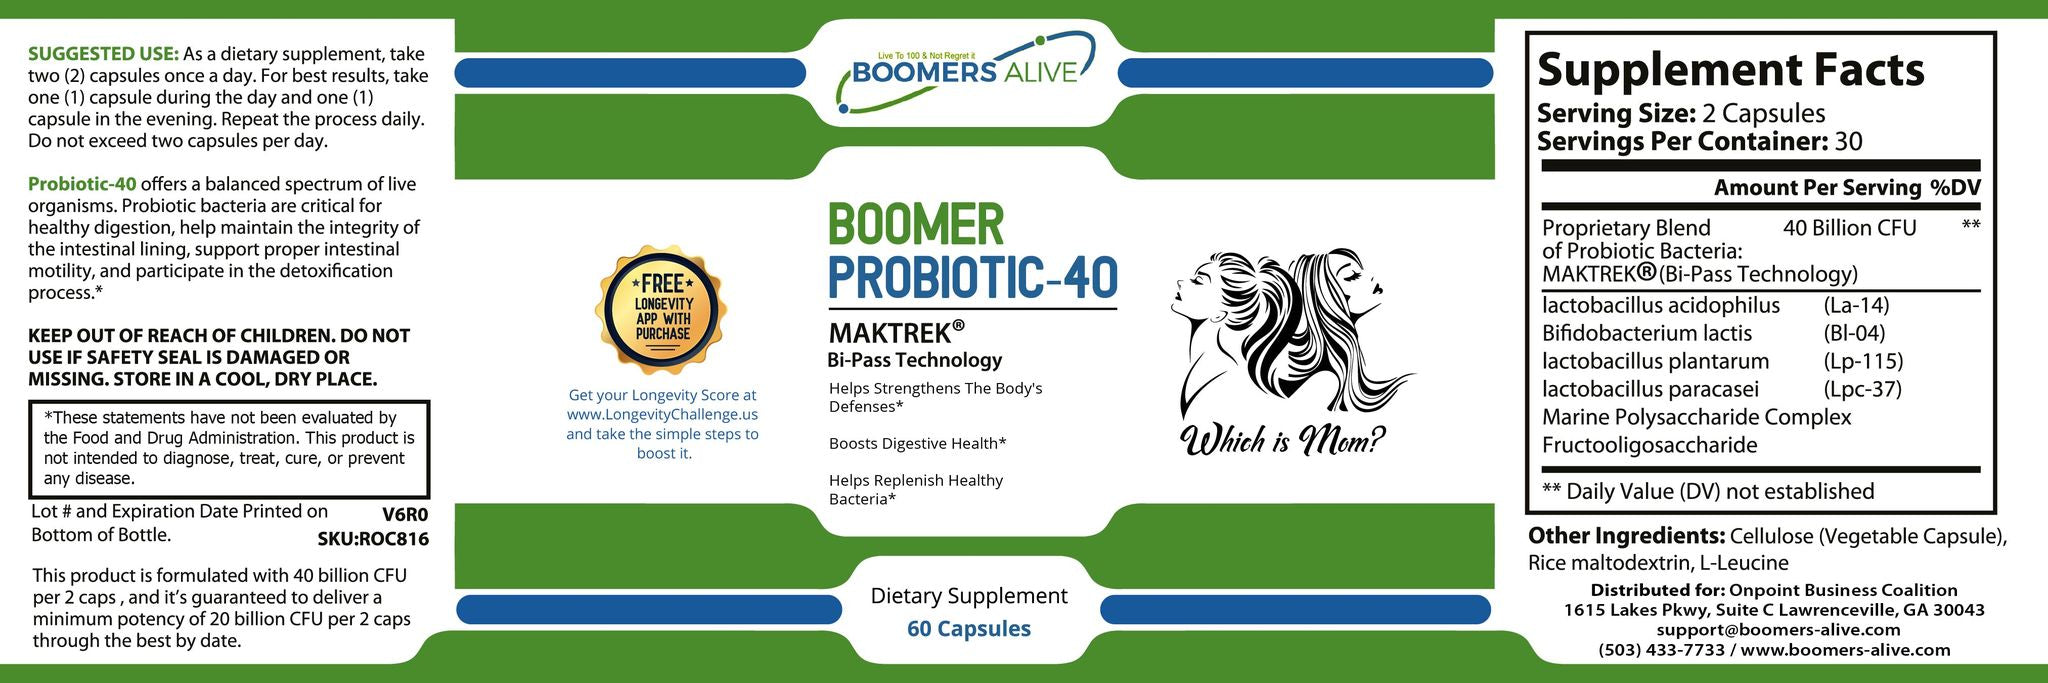 Buy 1 - Get 2 FREE: Boomer Probiotic-40